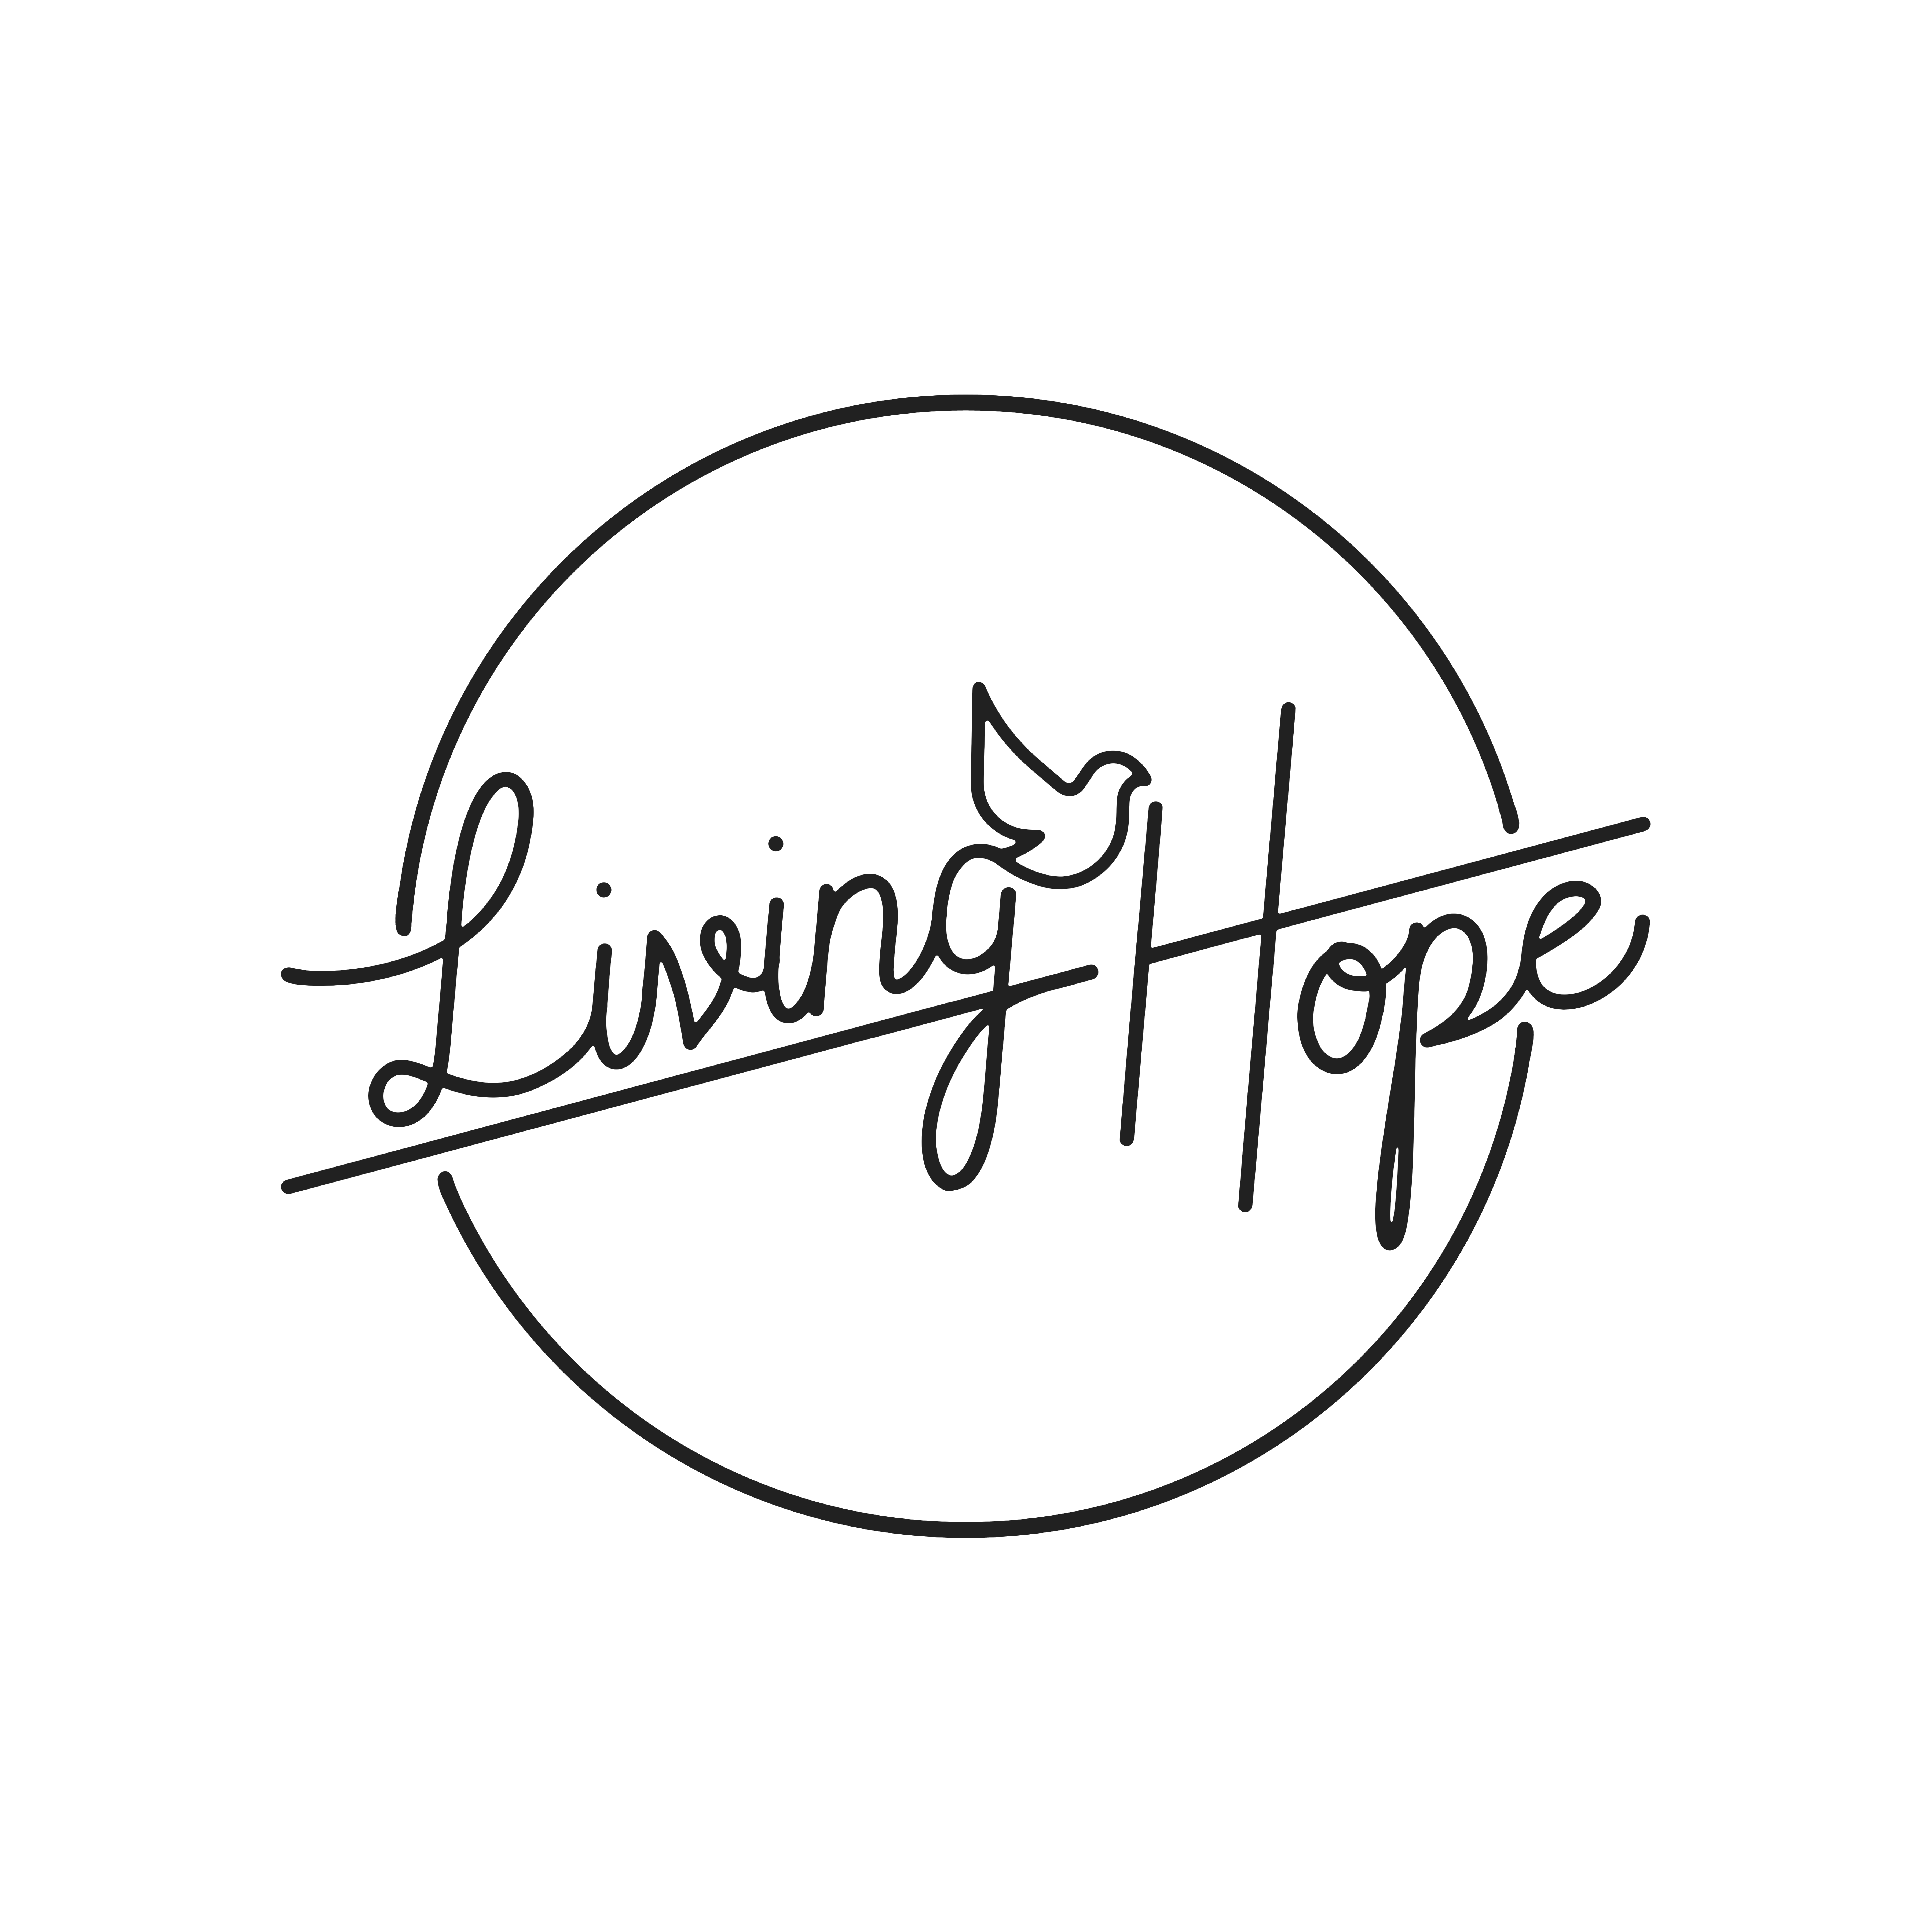 Living Hope International Ministries